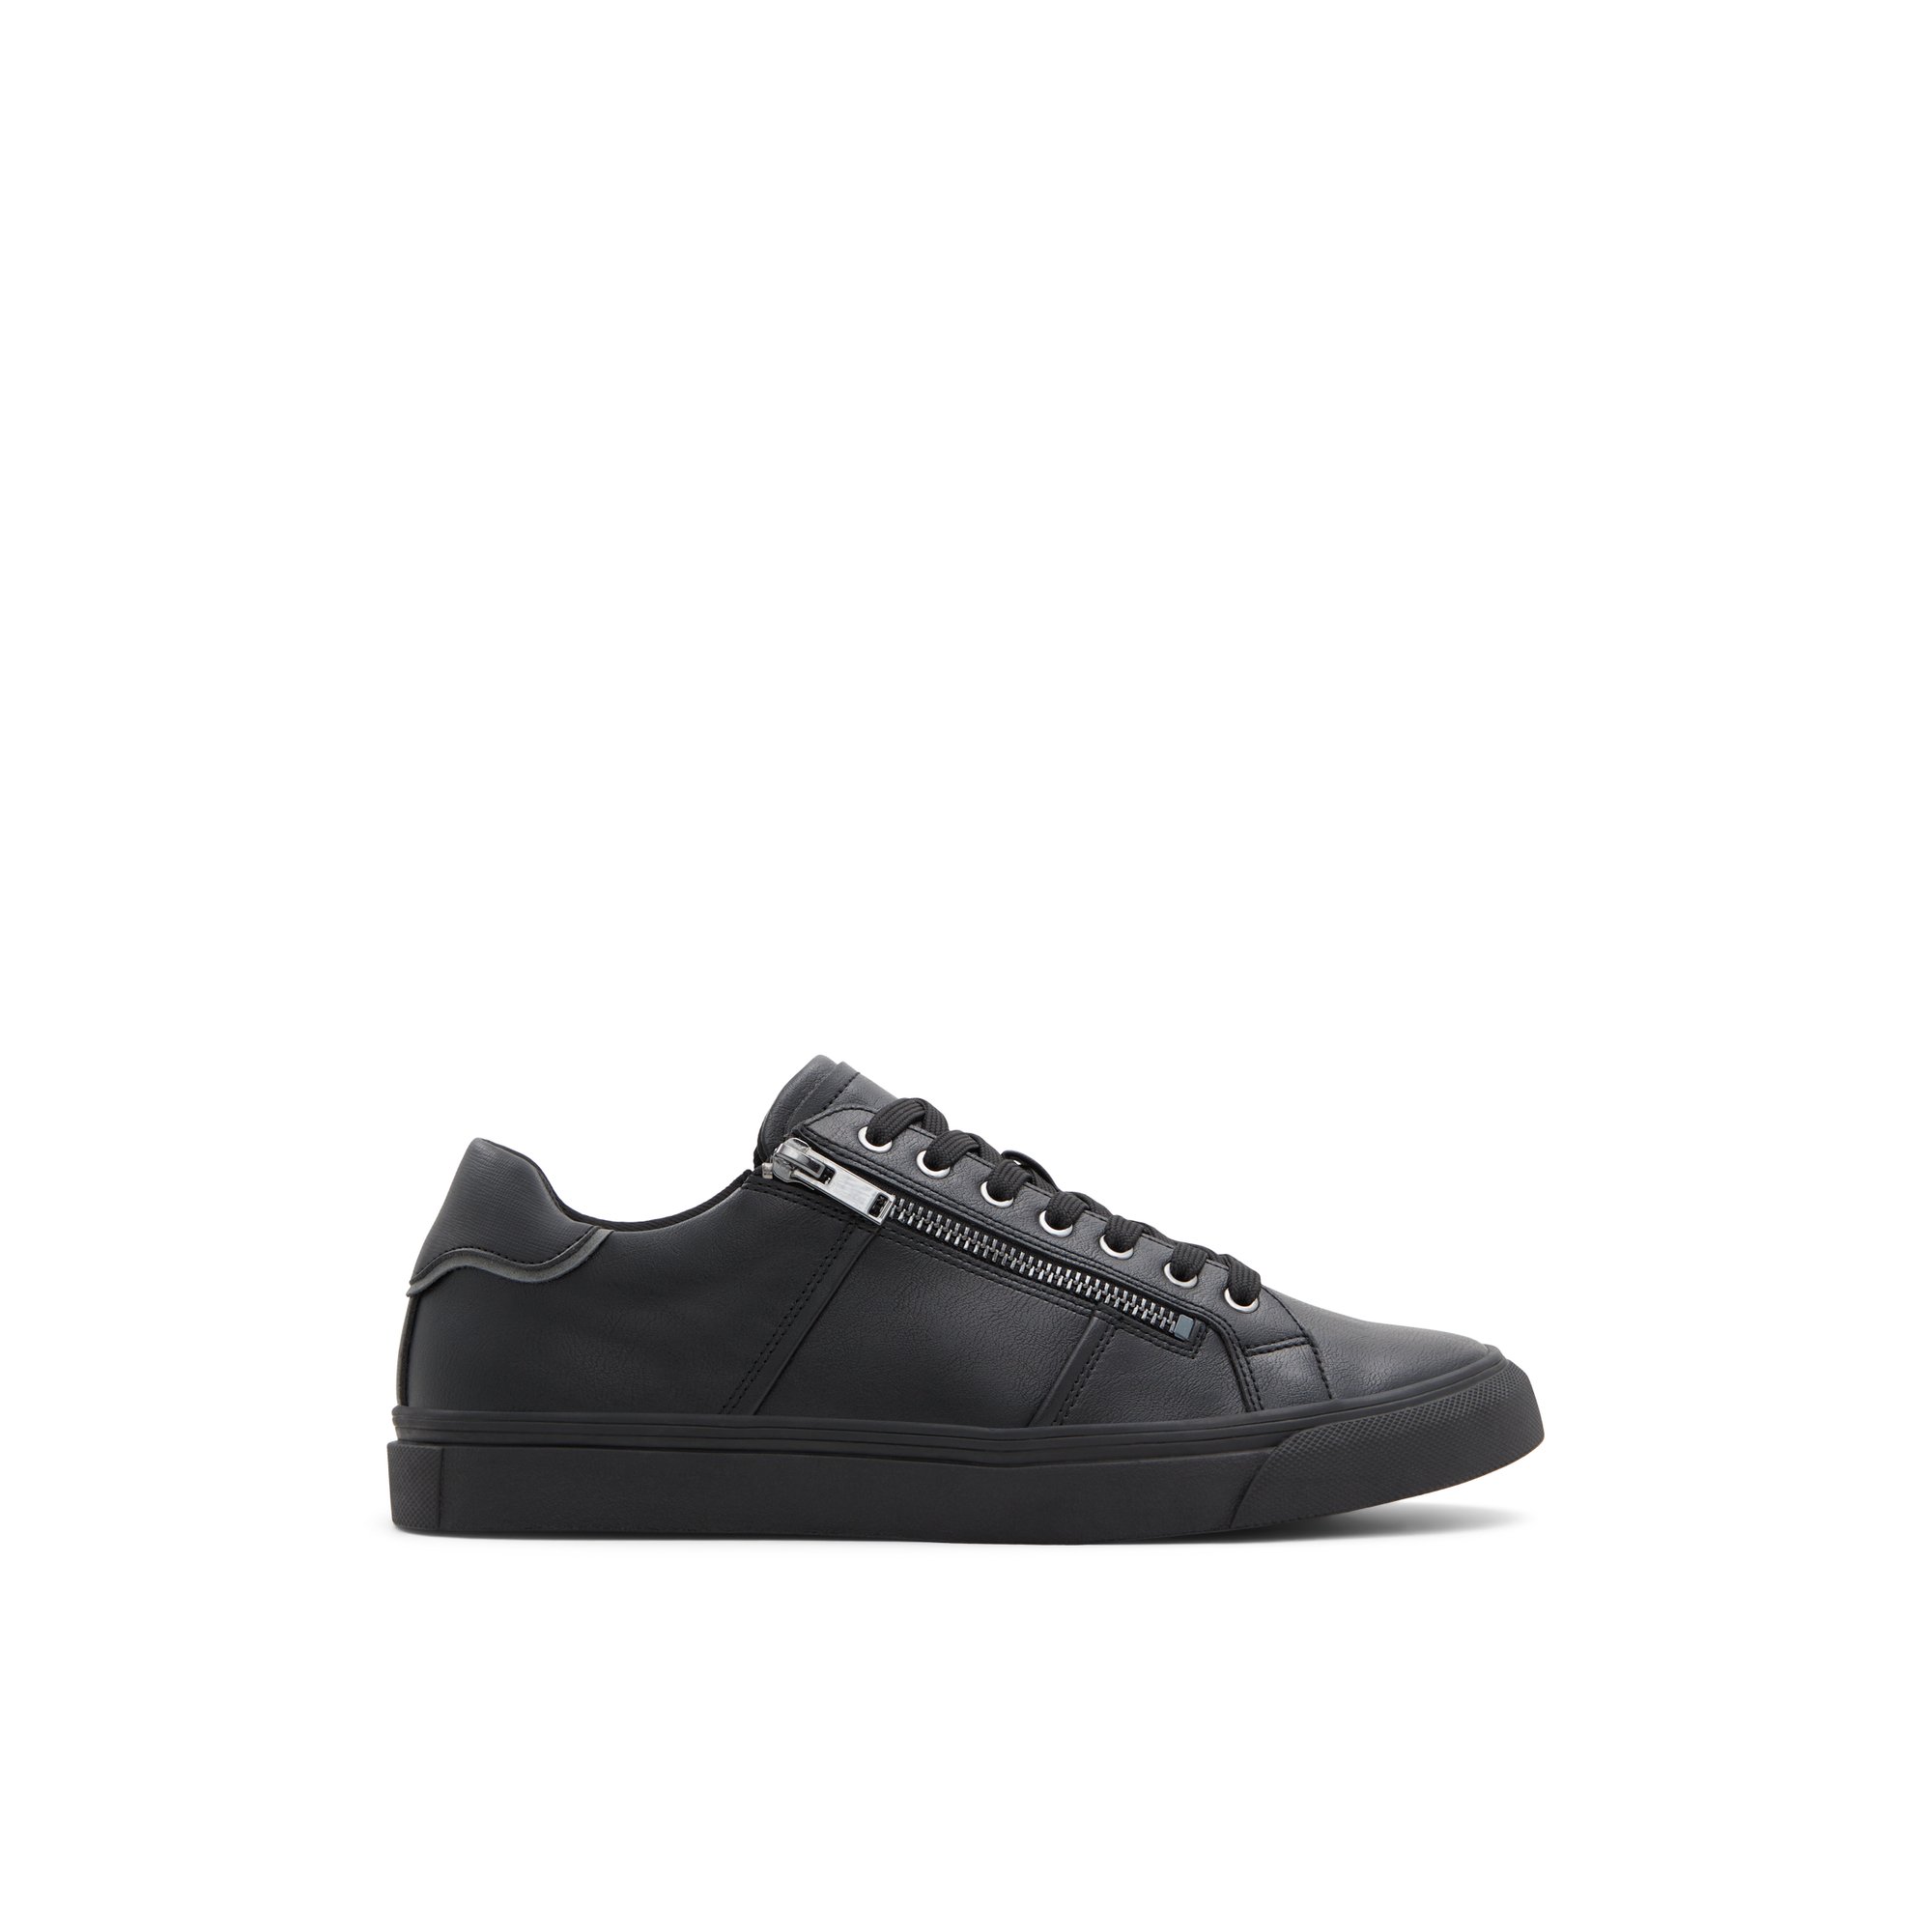 ALDO Bowsprit - Men's Low Top Sneakers - Black